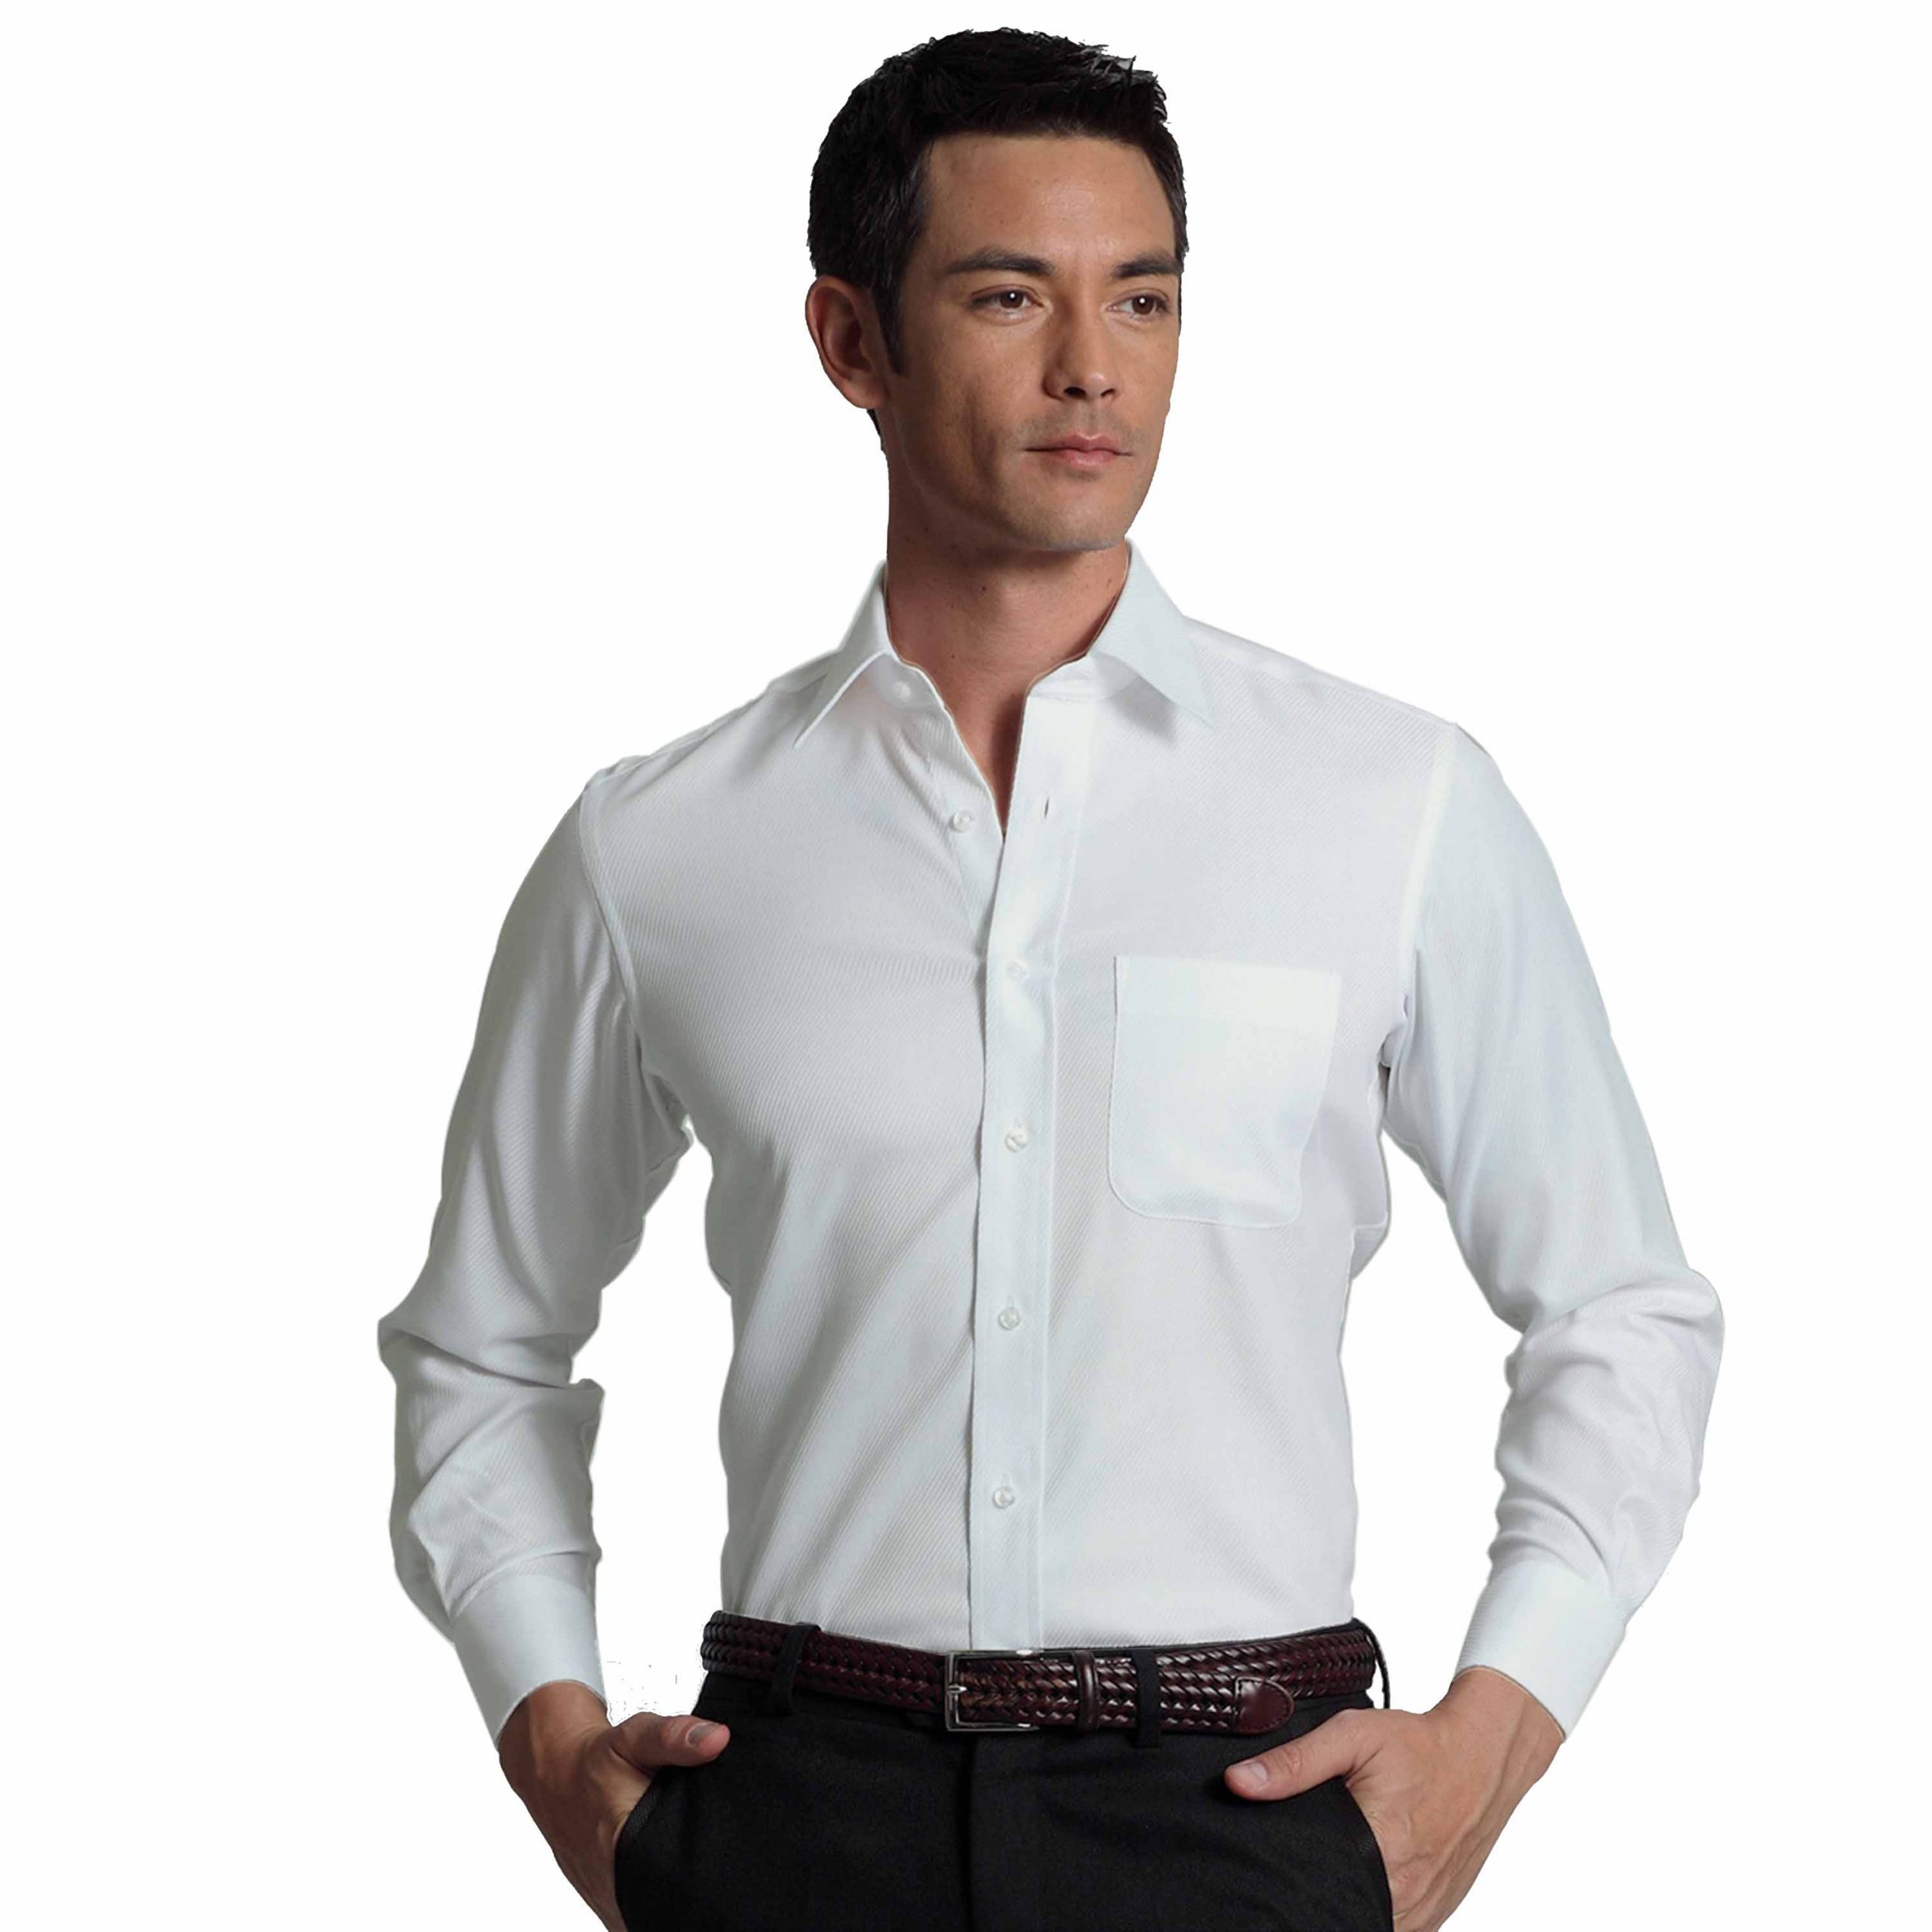 Bombay Rayon Men's Pure White Cotton Satin Weave Shirt Fabric